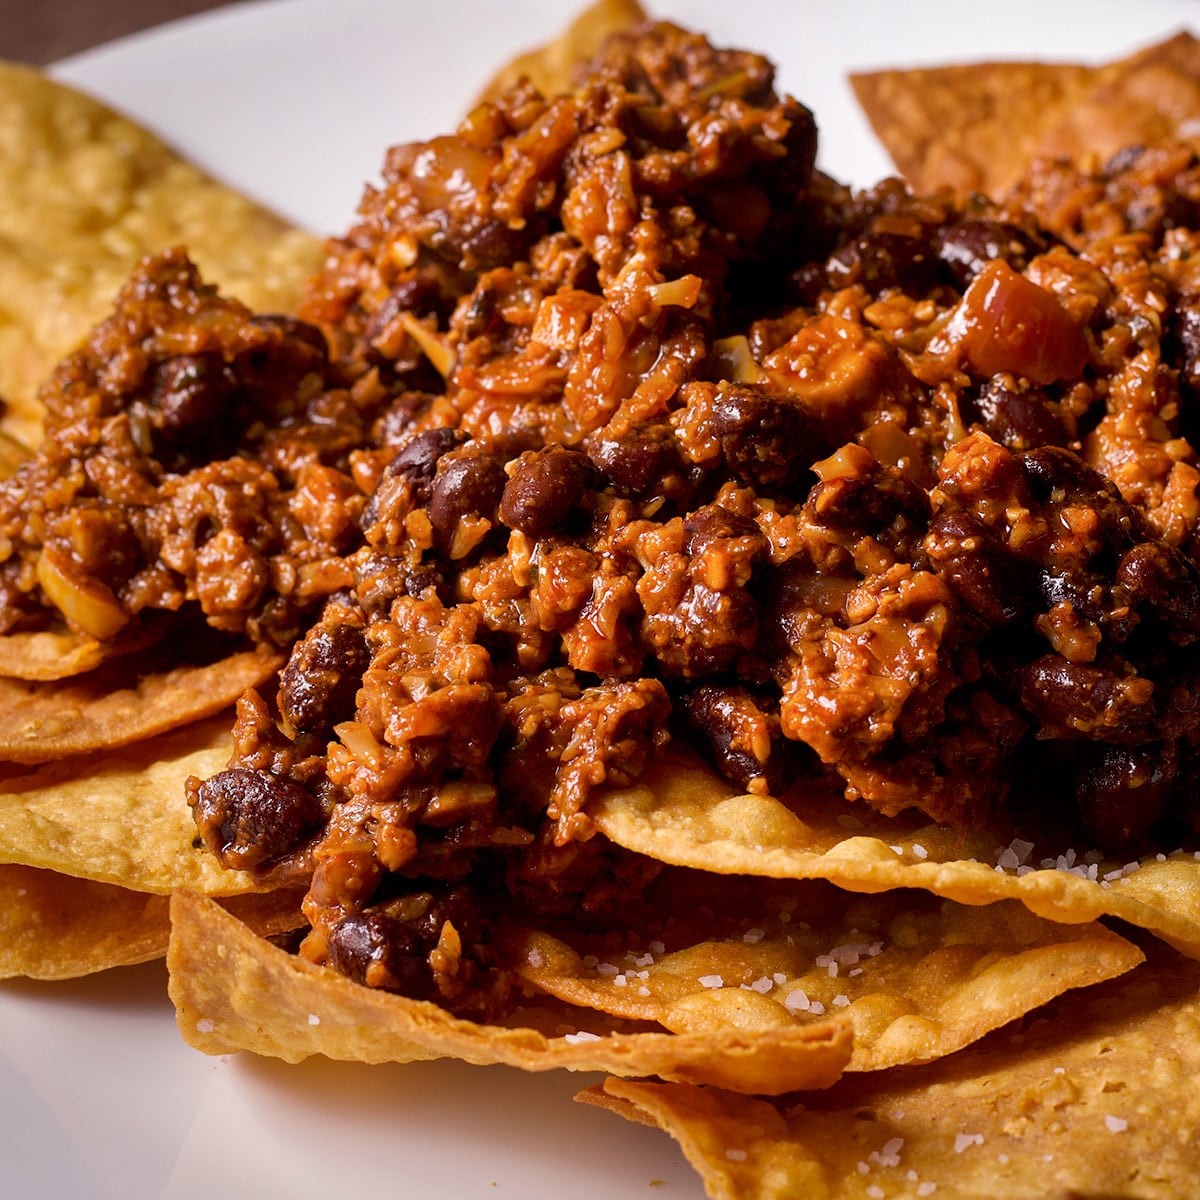 Vegan taco meat piled onto tortilla chips.